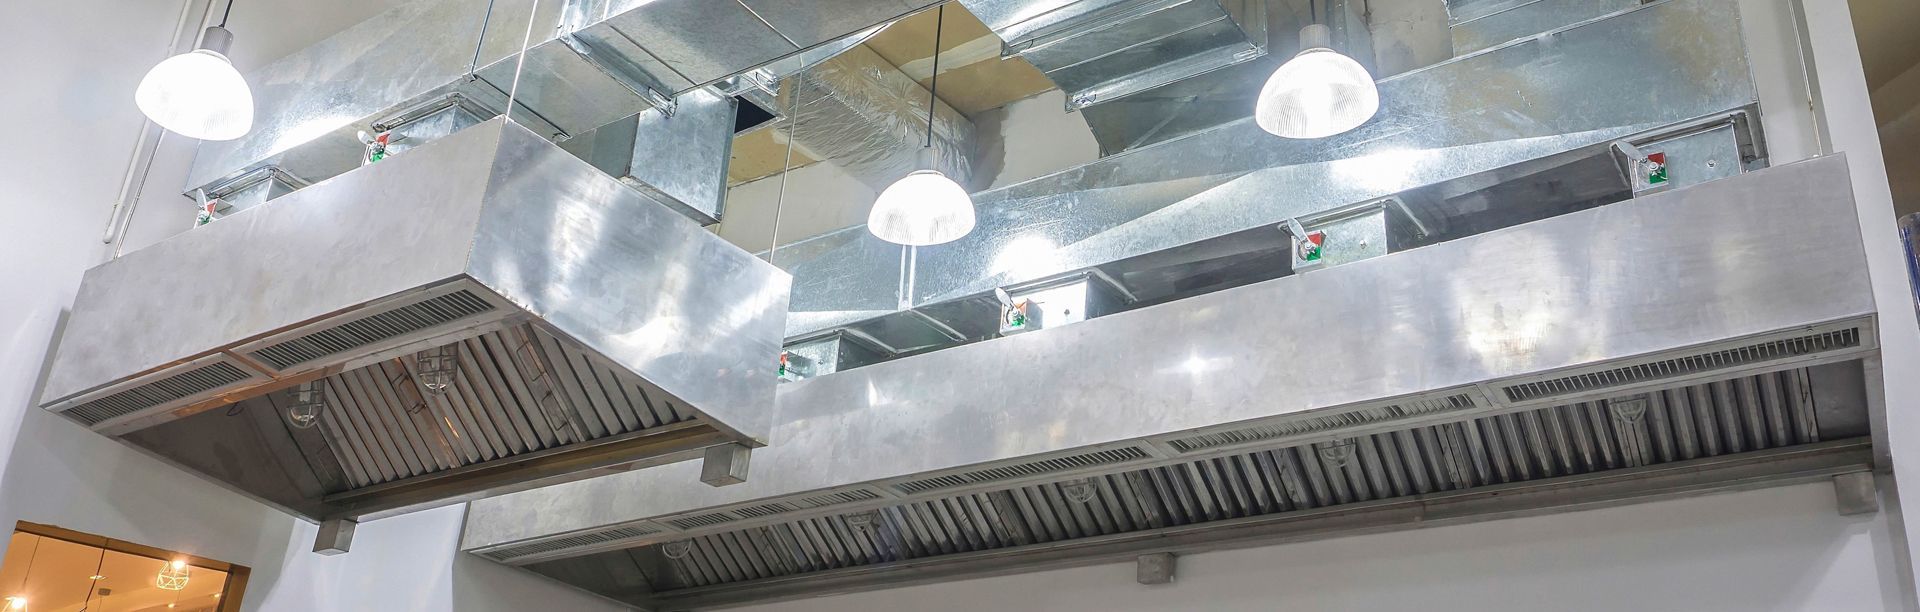 Restaurant ventilation system